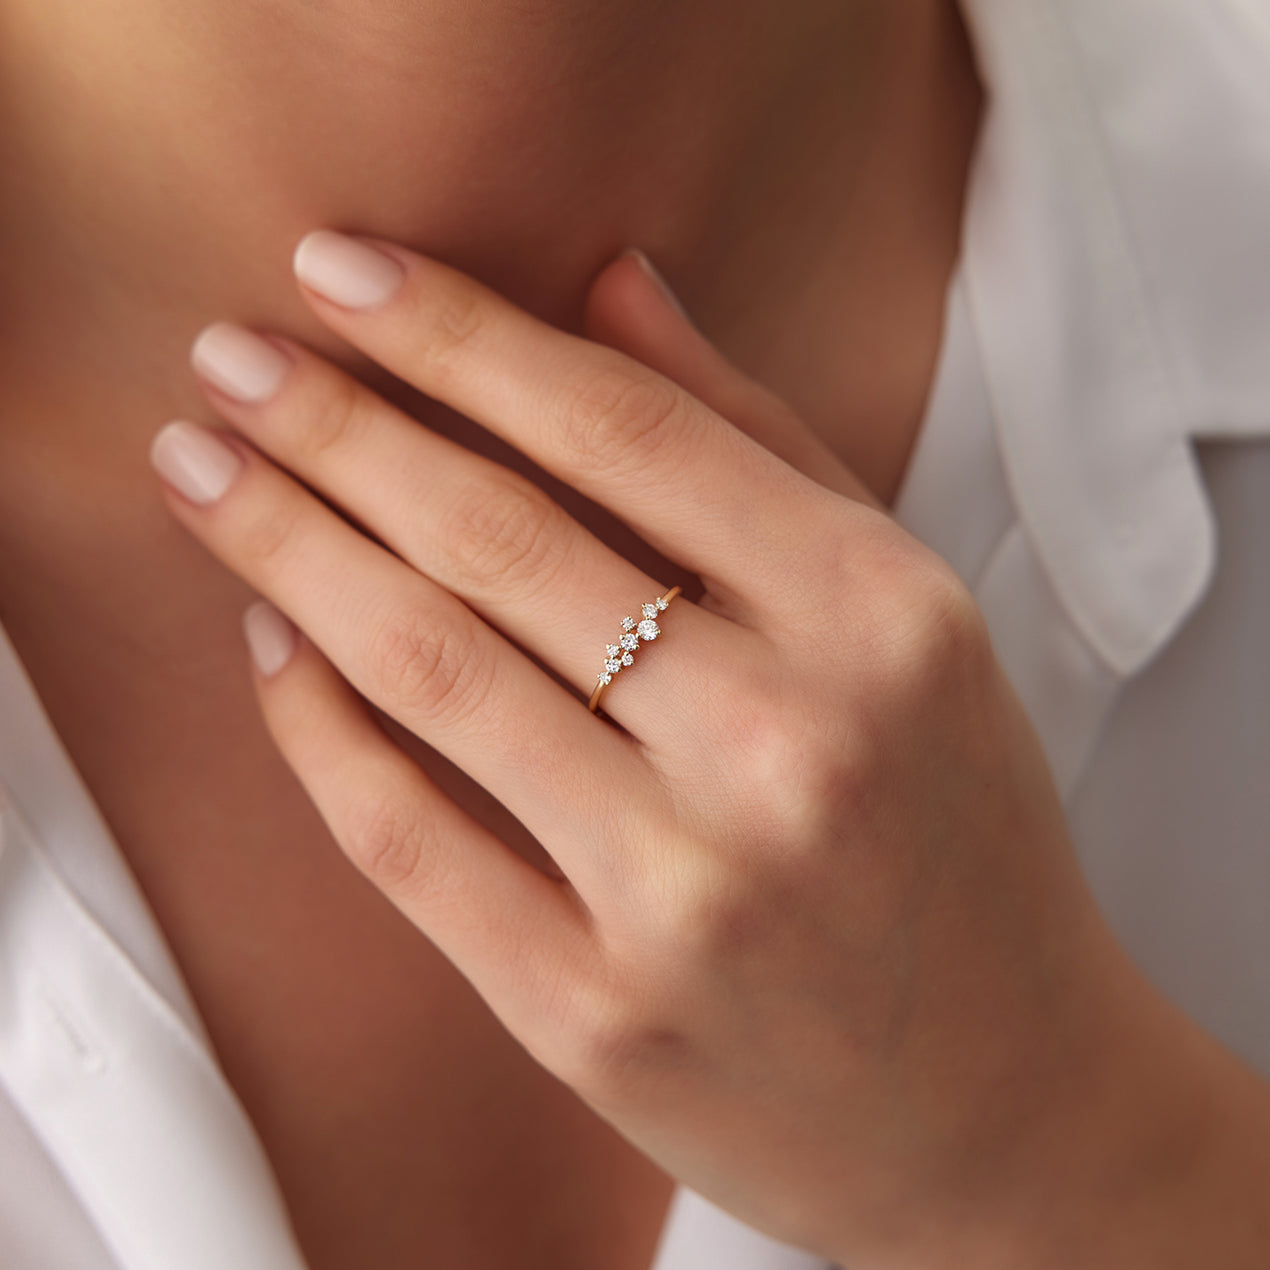 Abhir Men's Ring - Buy Certified Gold & Diamond Rings Online | KuberBox.com  - KuberBox.com